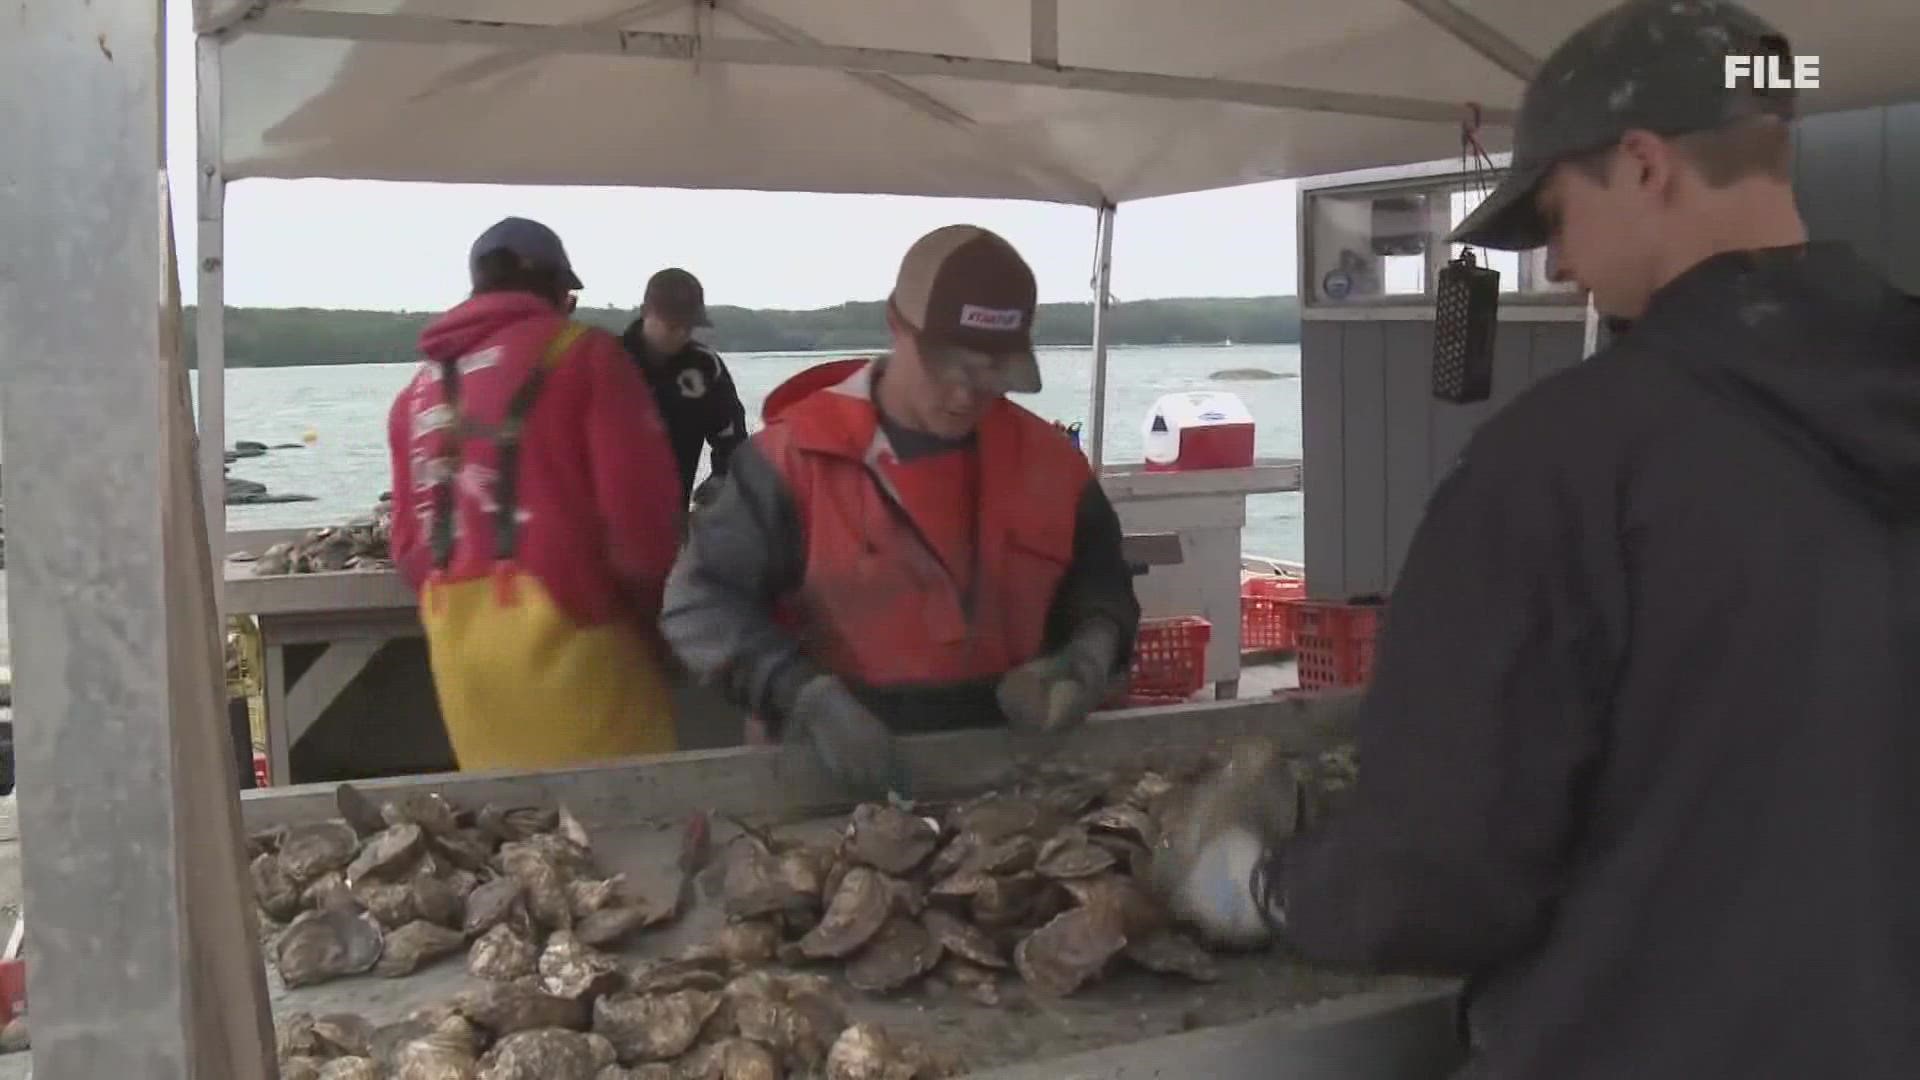 The Maine Aquaculture Association represents 190 commercial farms along the coastline